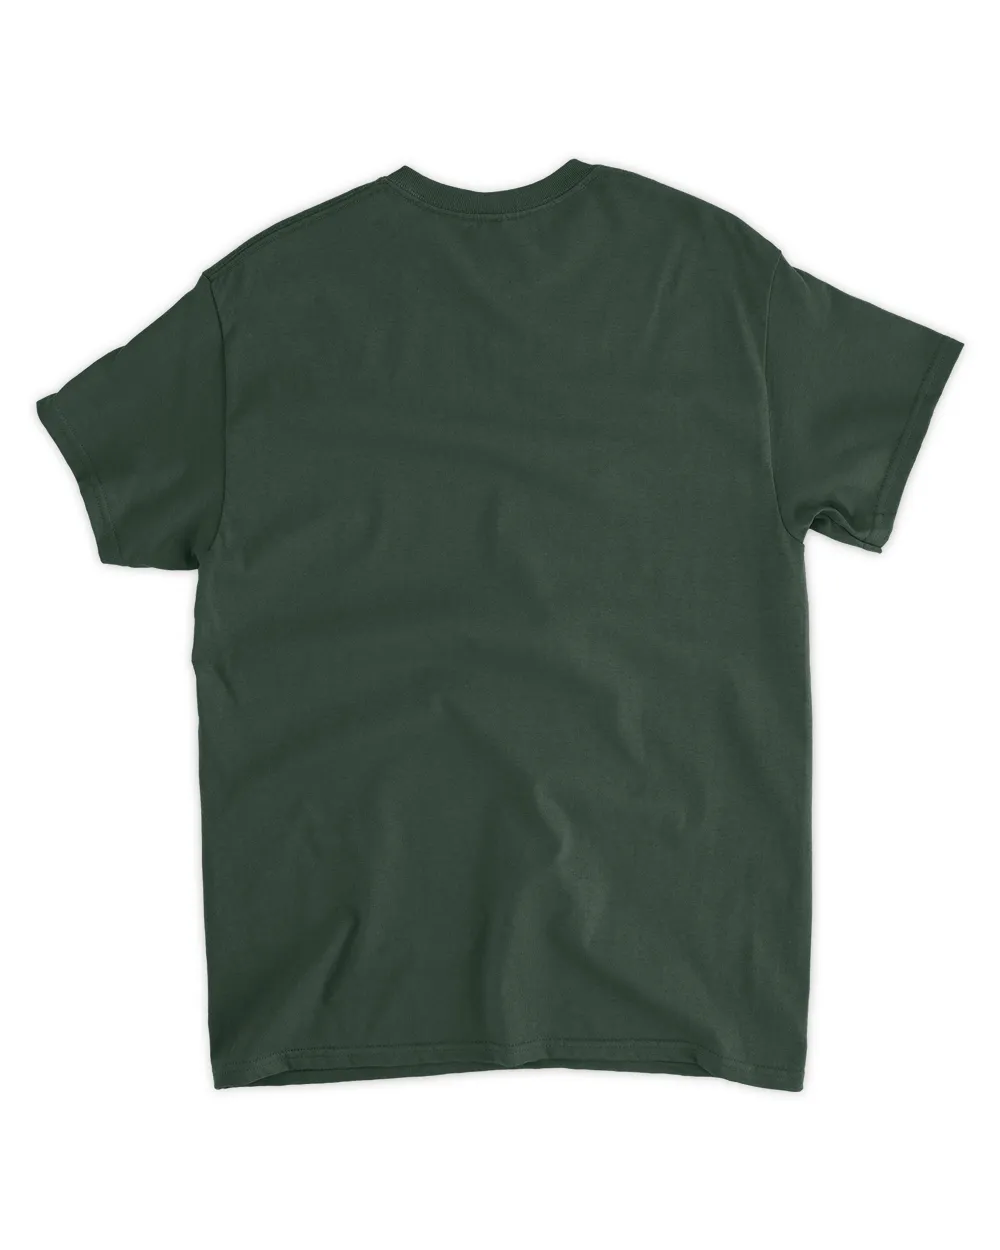 In May We Wear Green Mental Health Awareness Rainbow T-Shirt